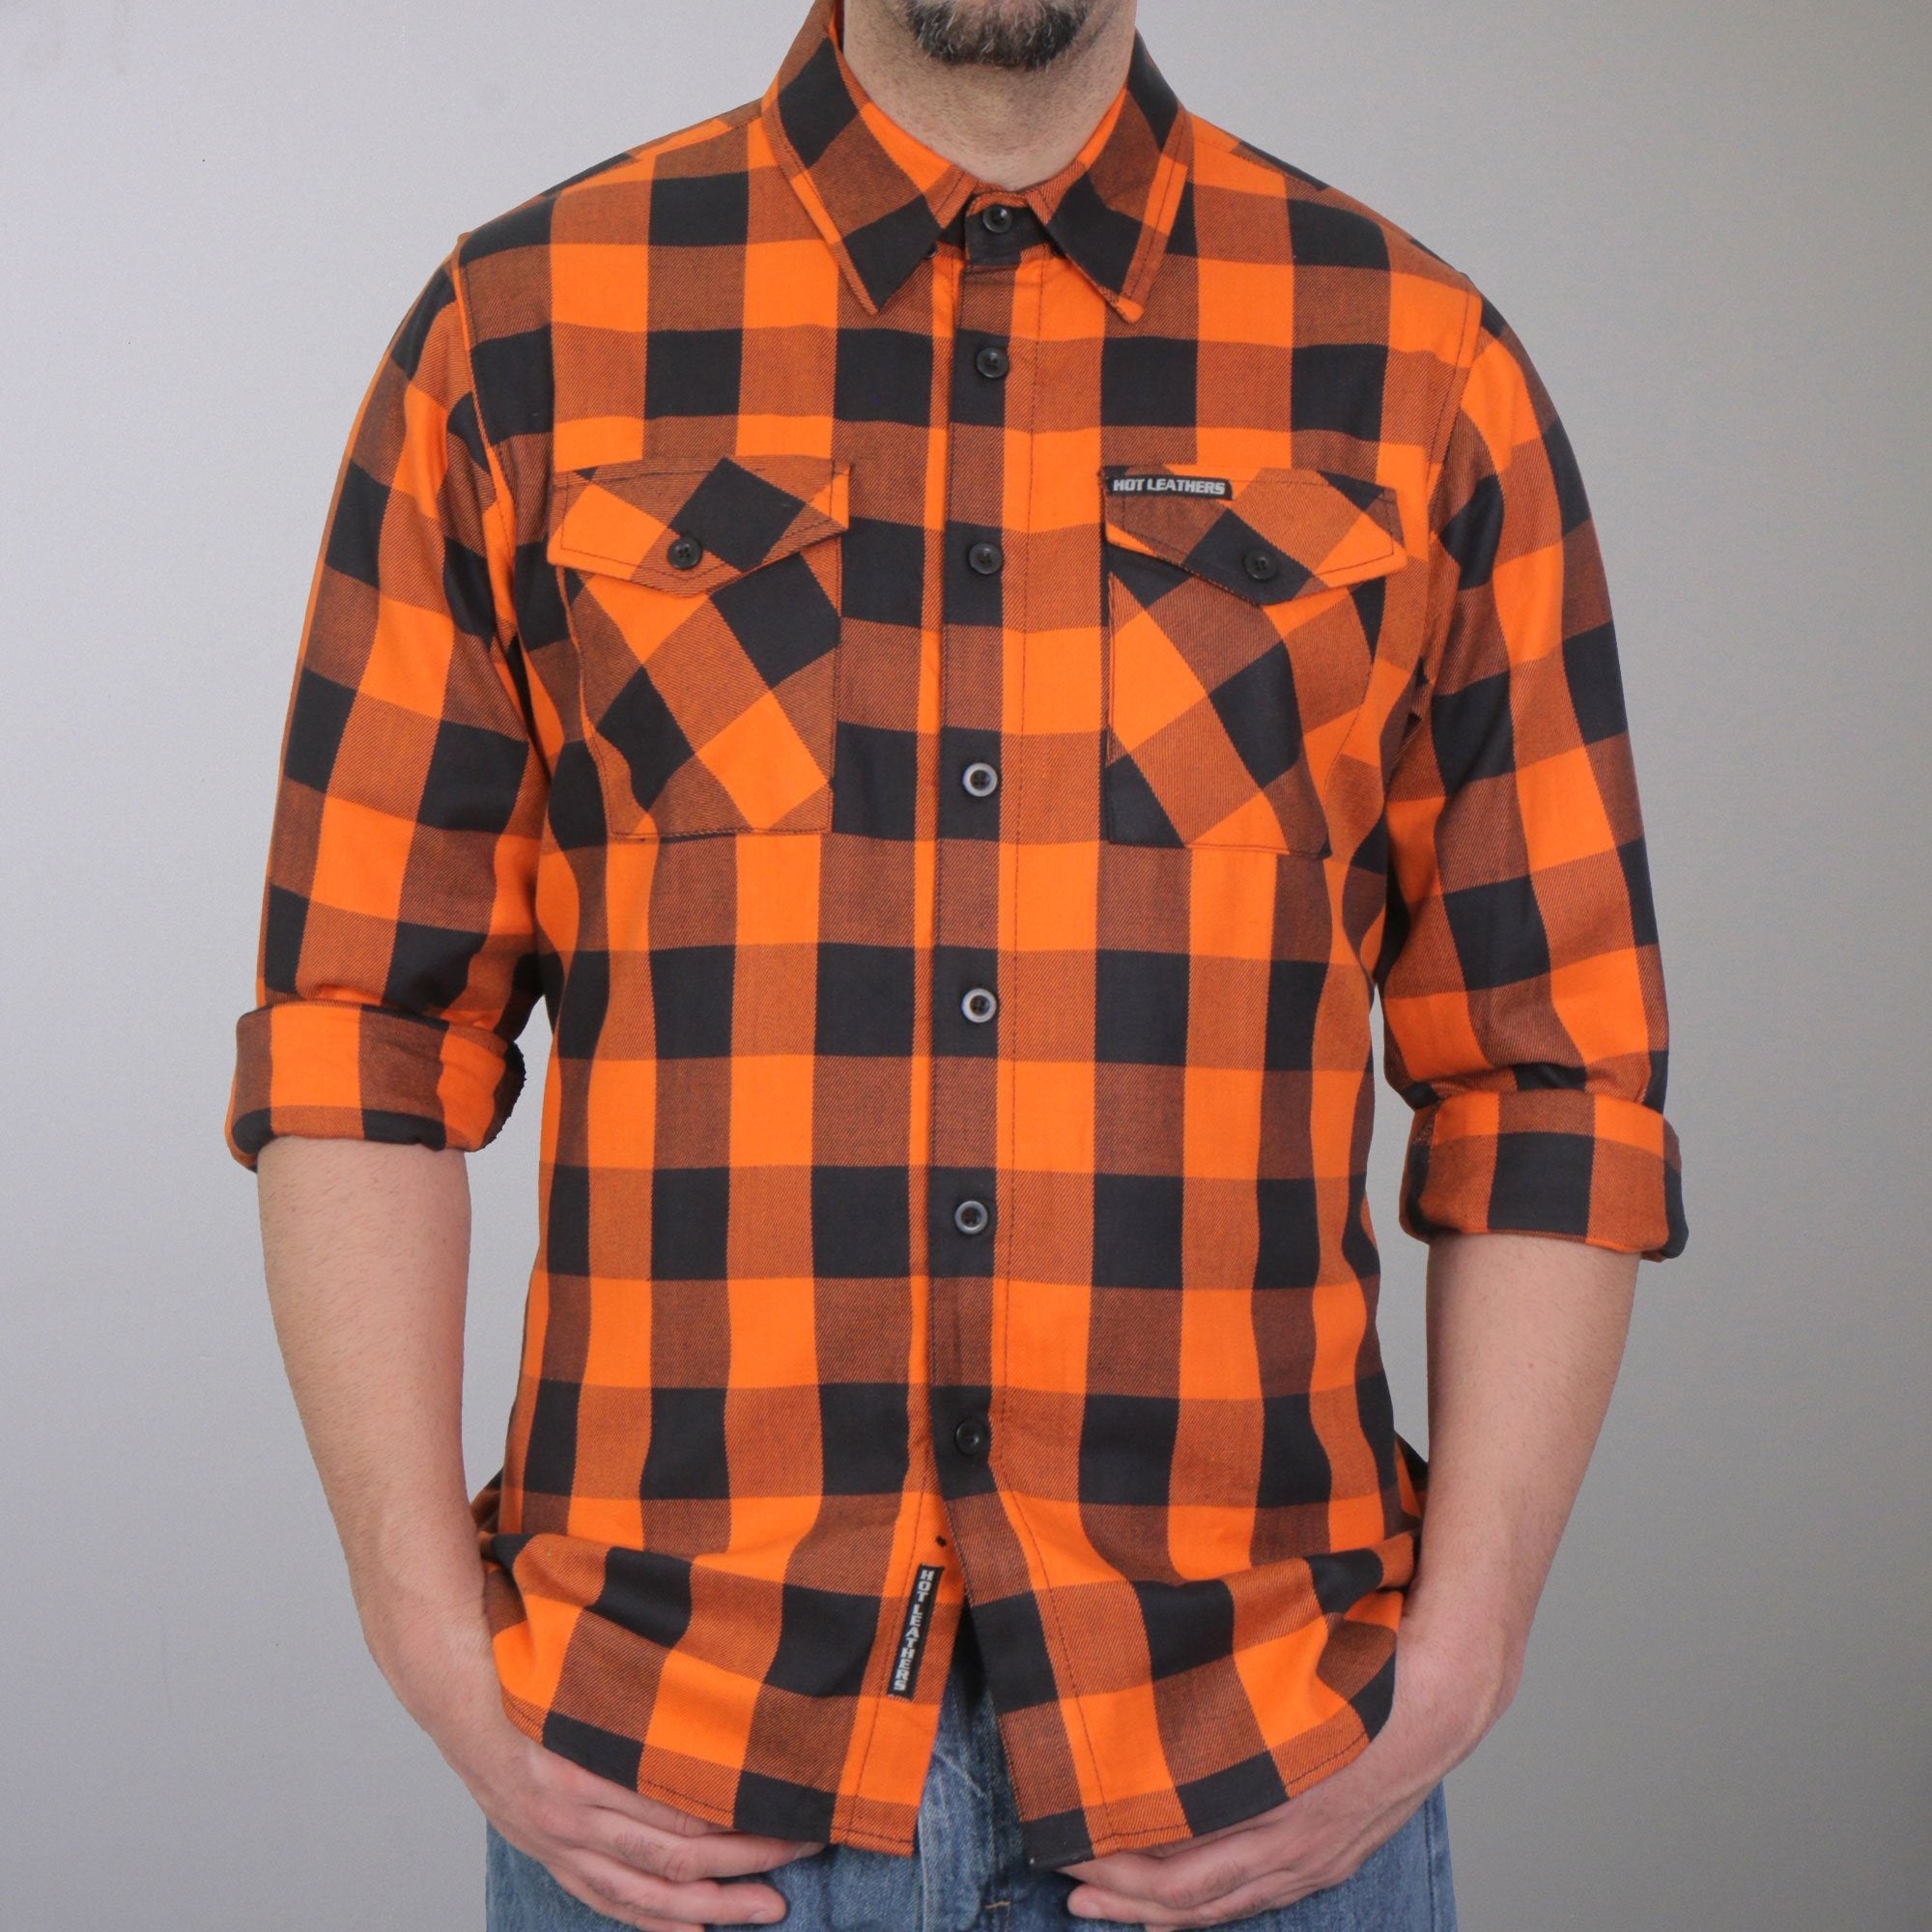 Hot Leathers 19275 Flannel Long Sleeve Shirt (Medium, Orange/Black)